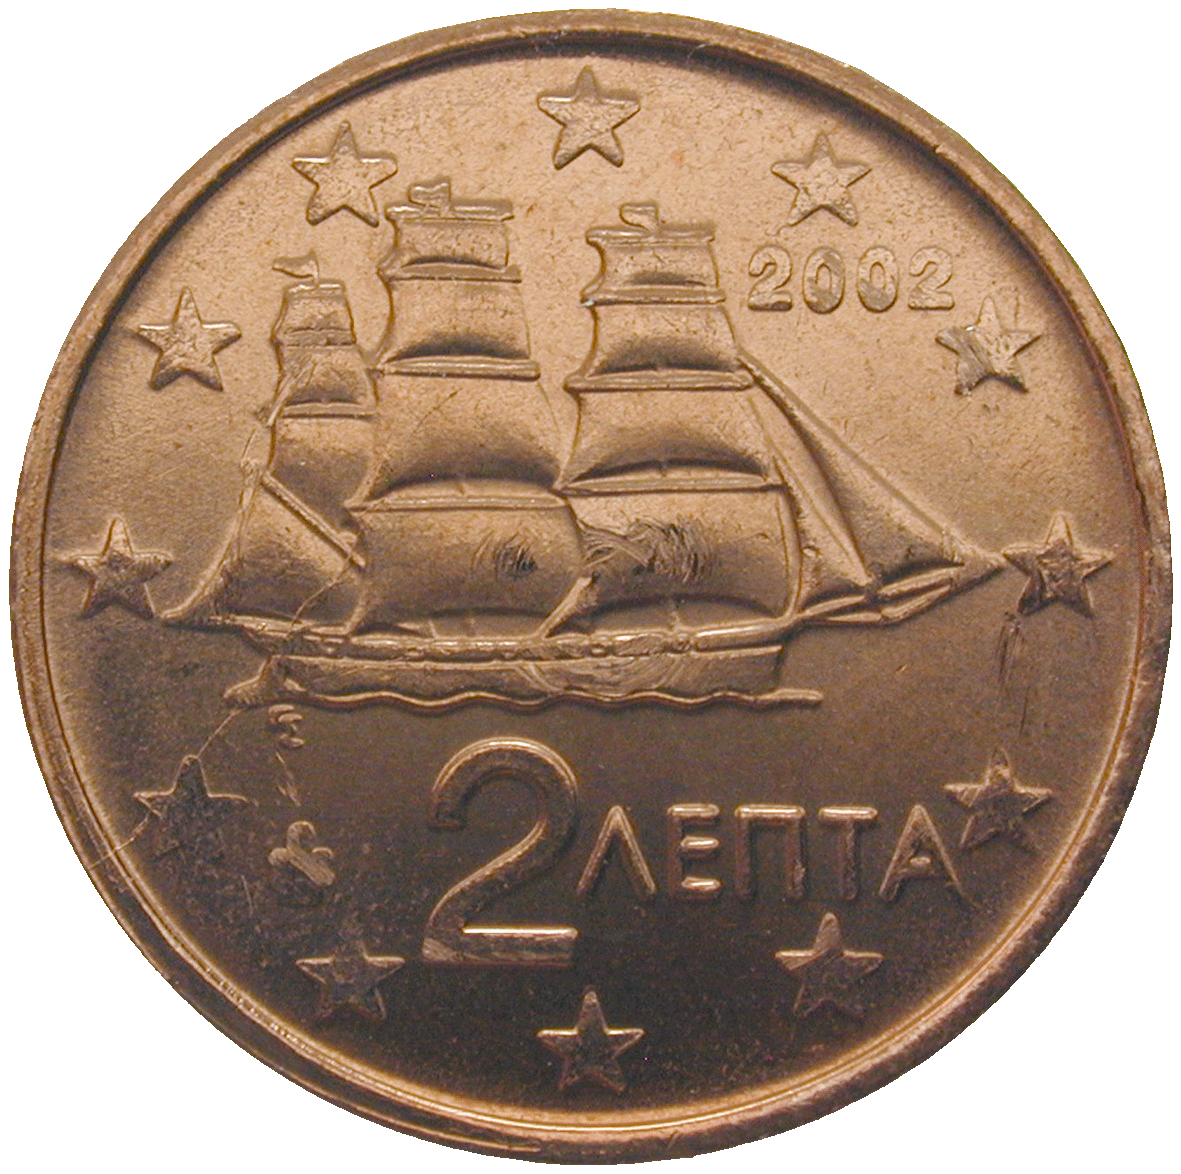 Republik Griechenland, 2 Eurocent 2002 (obverse)